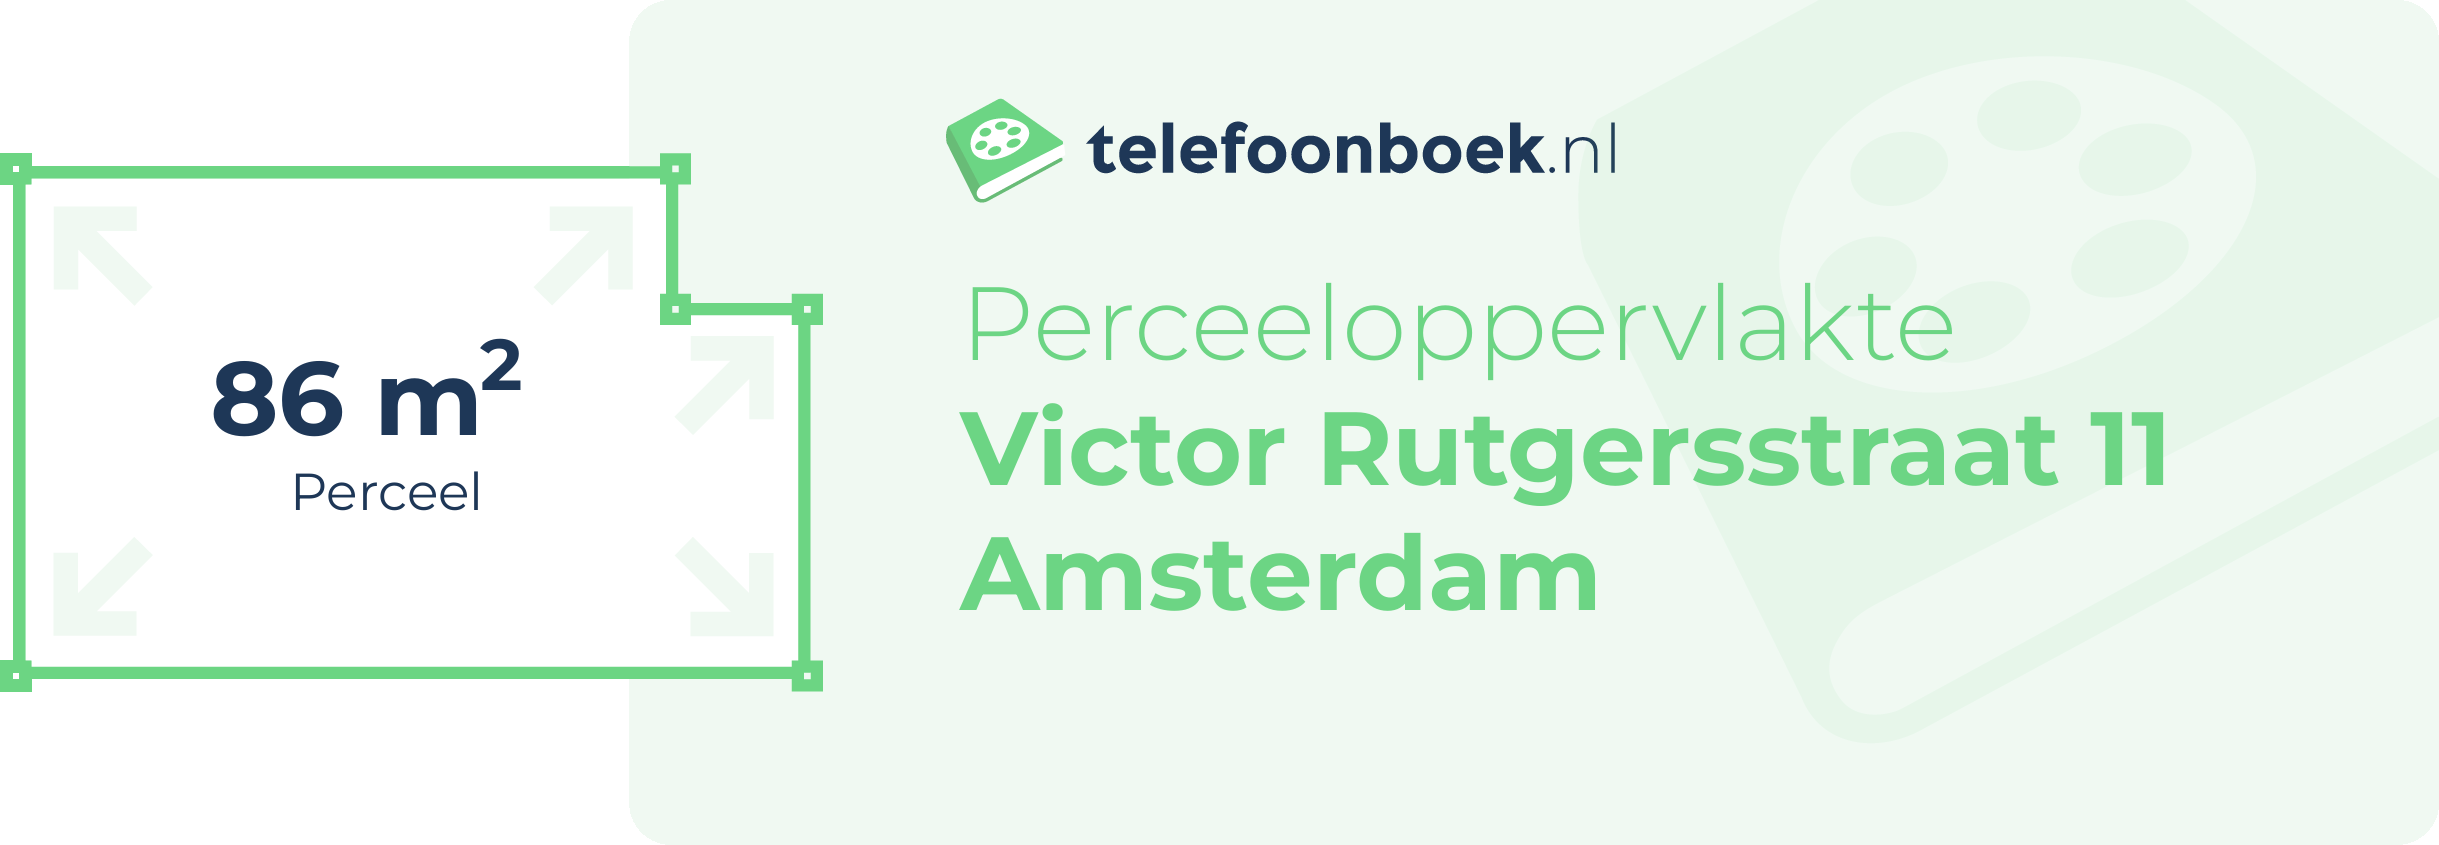 Perceeloppervlakte Victor Rutgersstraat 11 Amsterdam